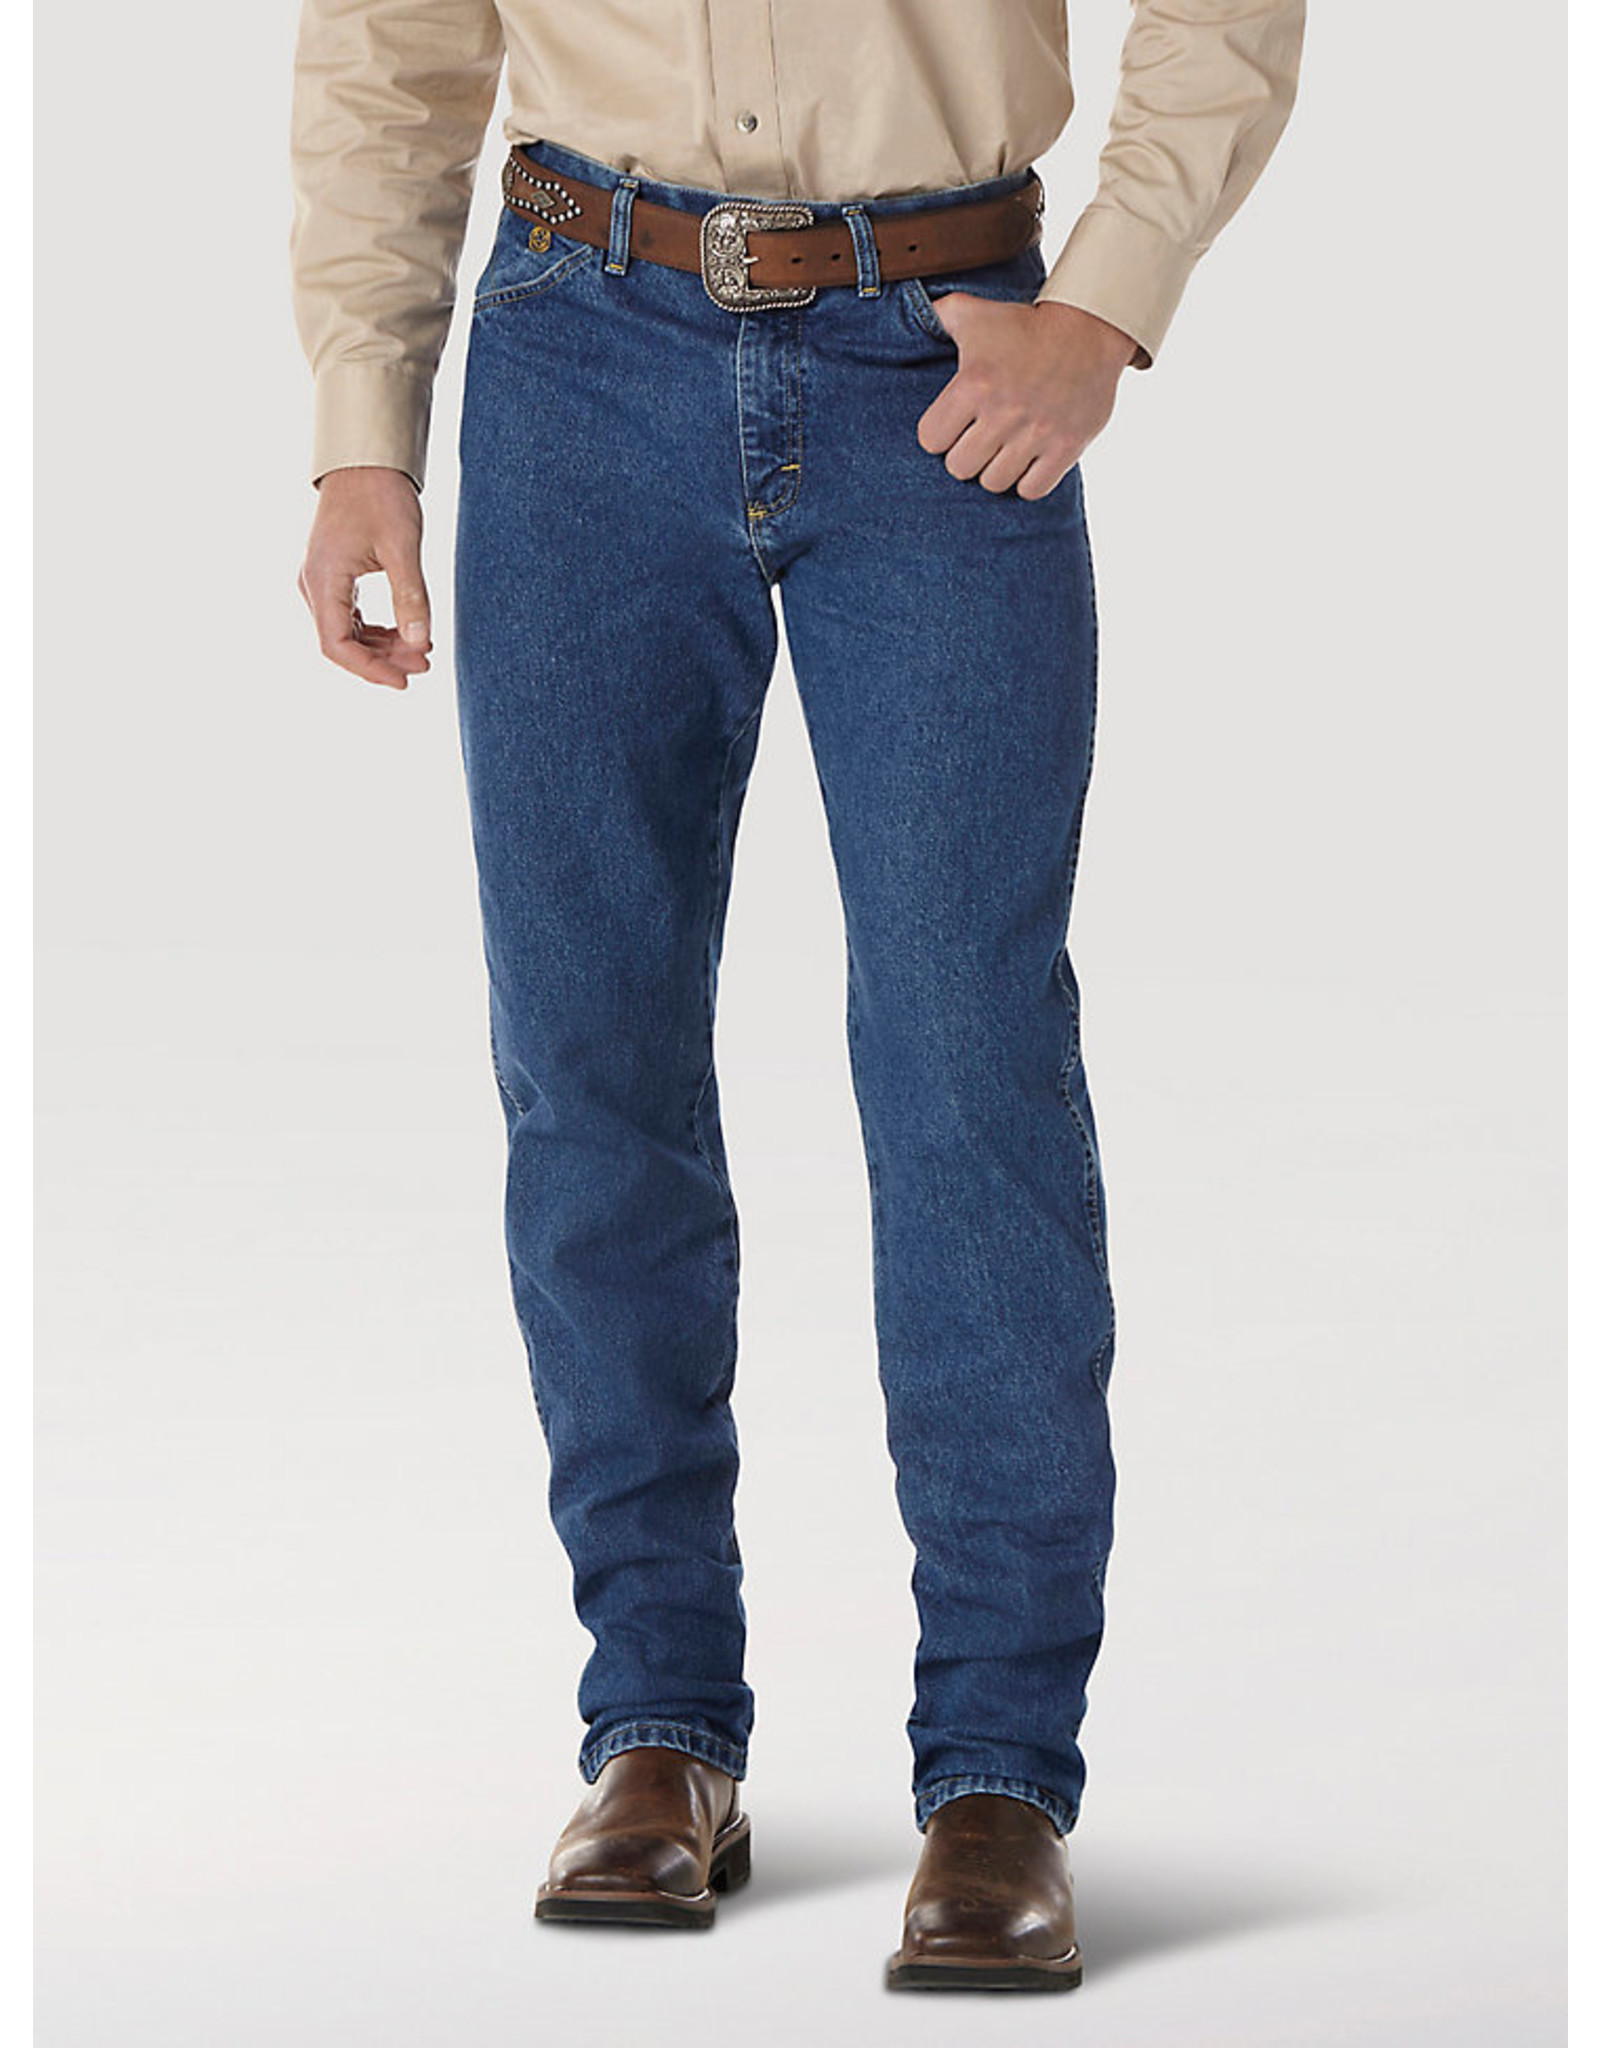 Jeans-Men WRANGLER 13MGS George Straight Cowboy Cut Original Fit